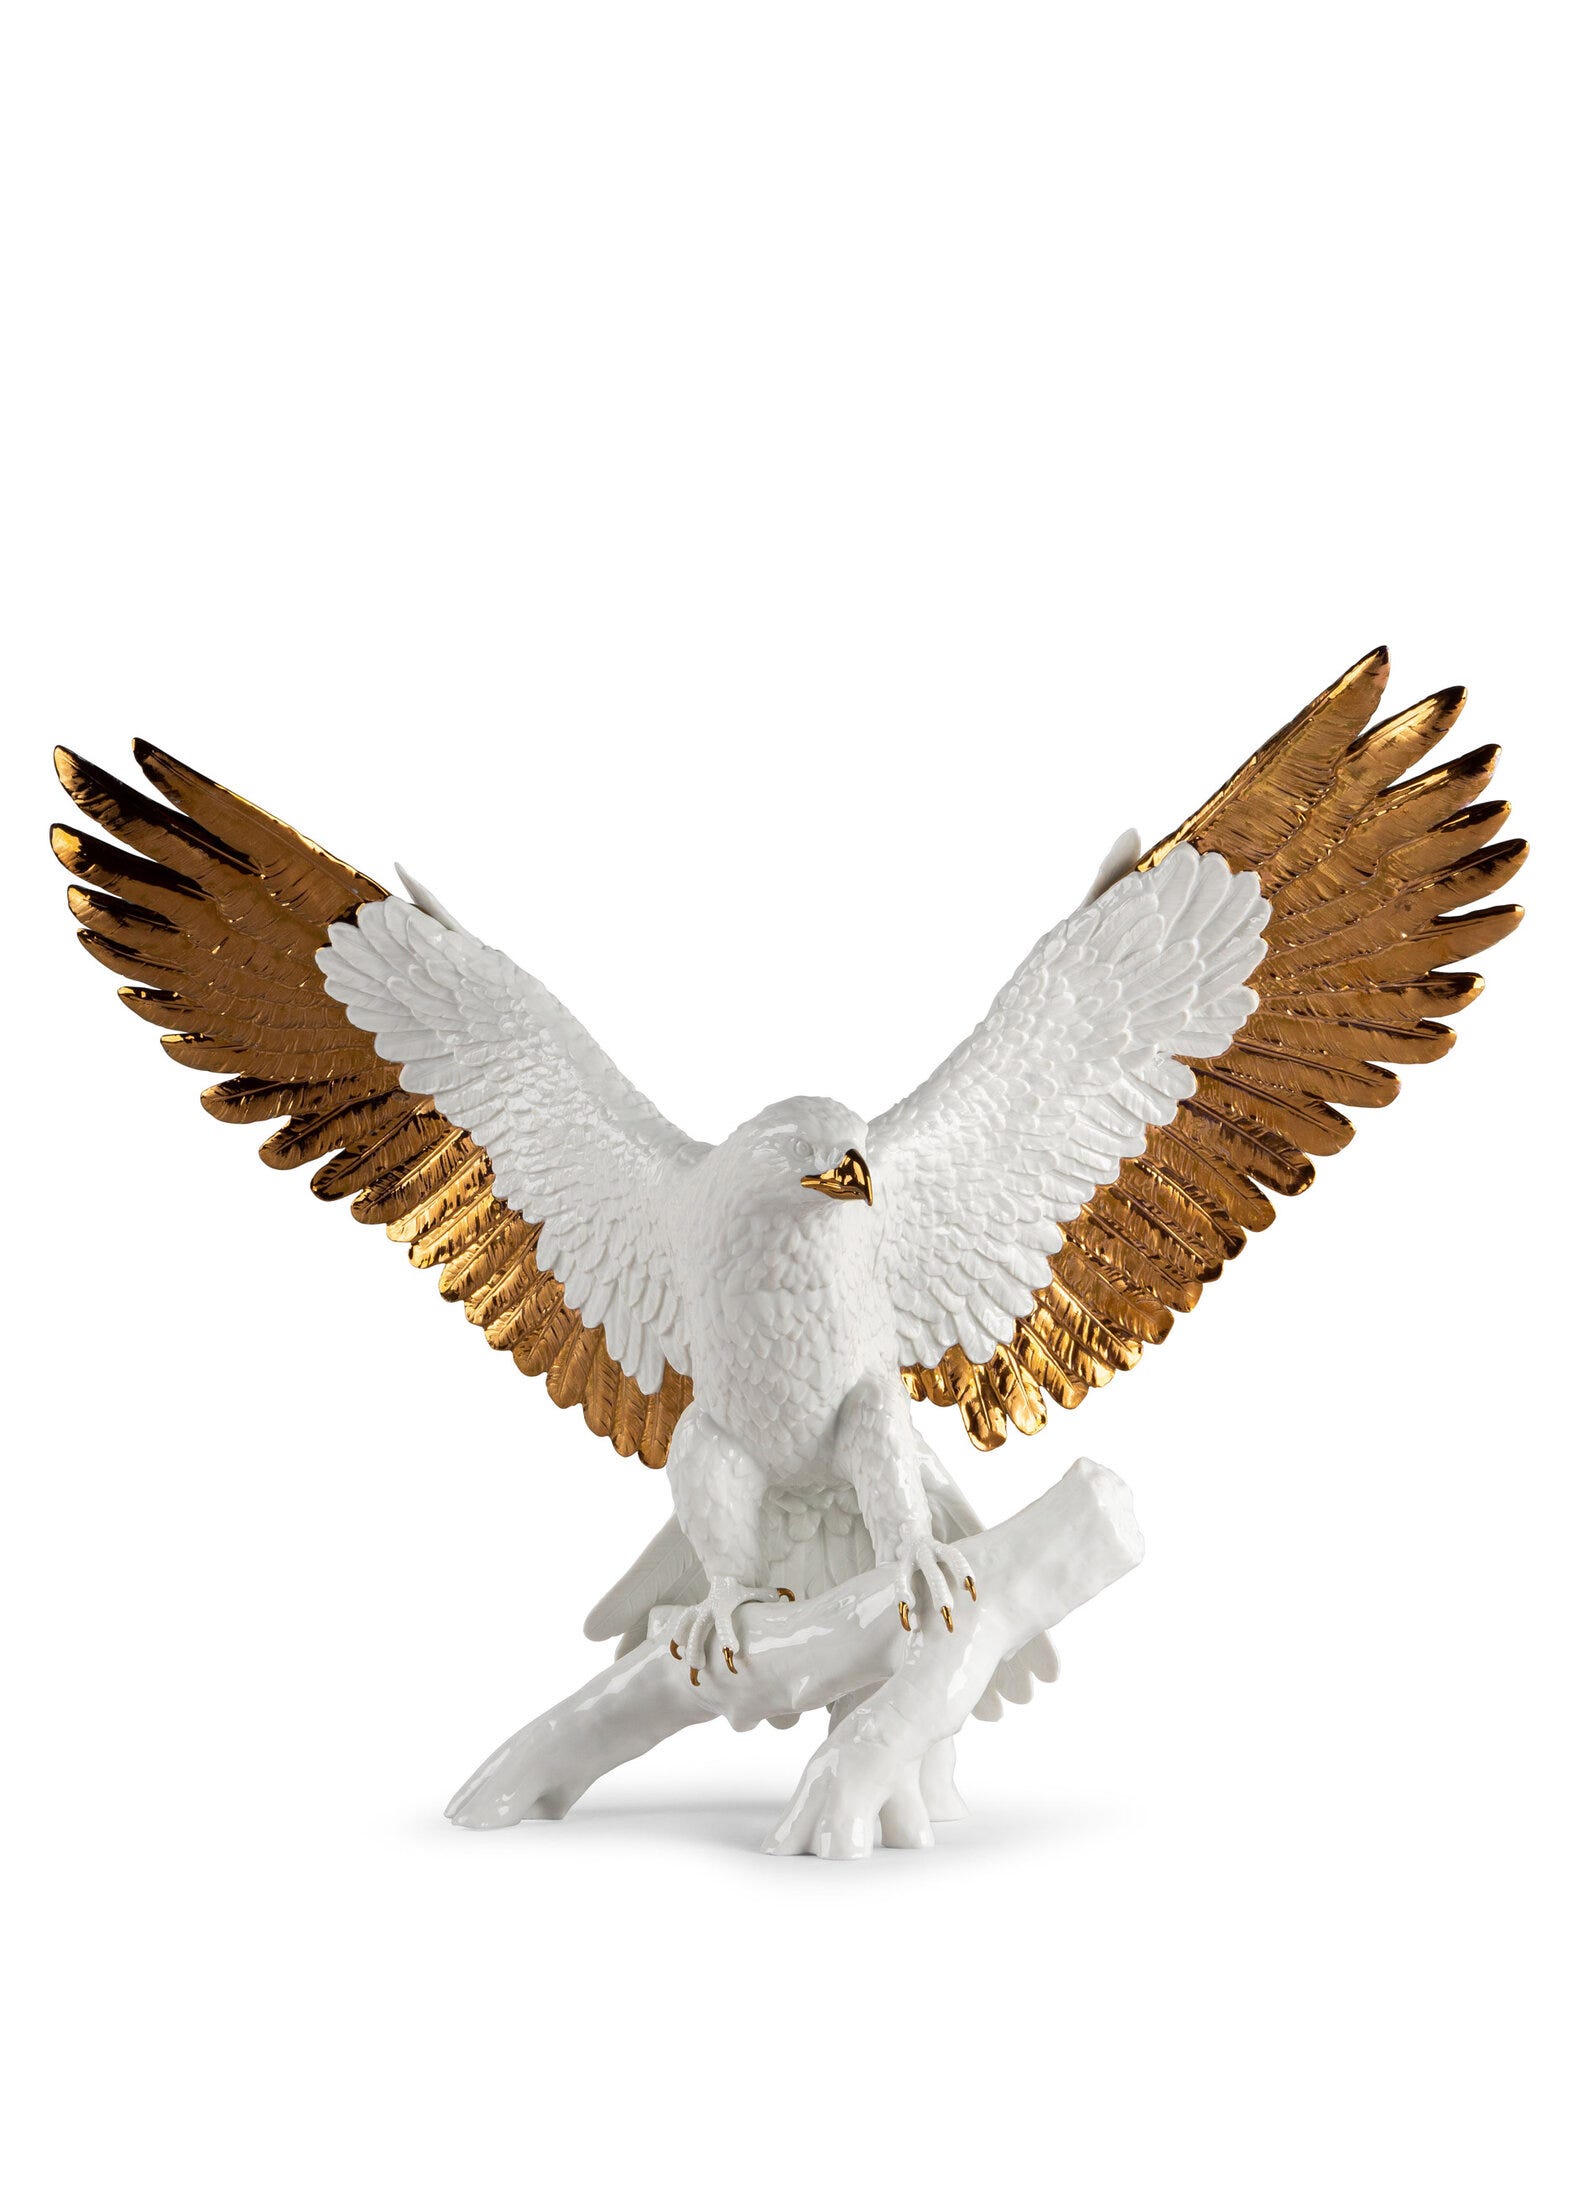 Handmade Copper Eagle Home Ornament Bird  Figurines Desk Décor Animal Sculpture 